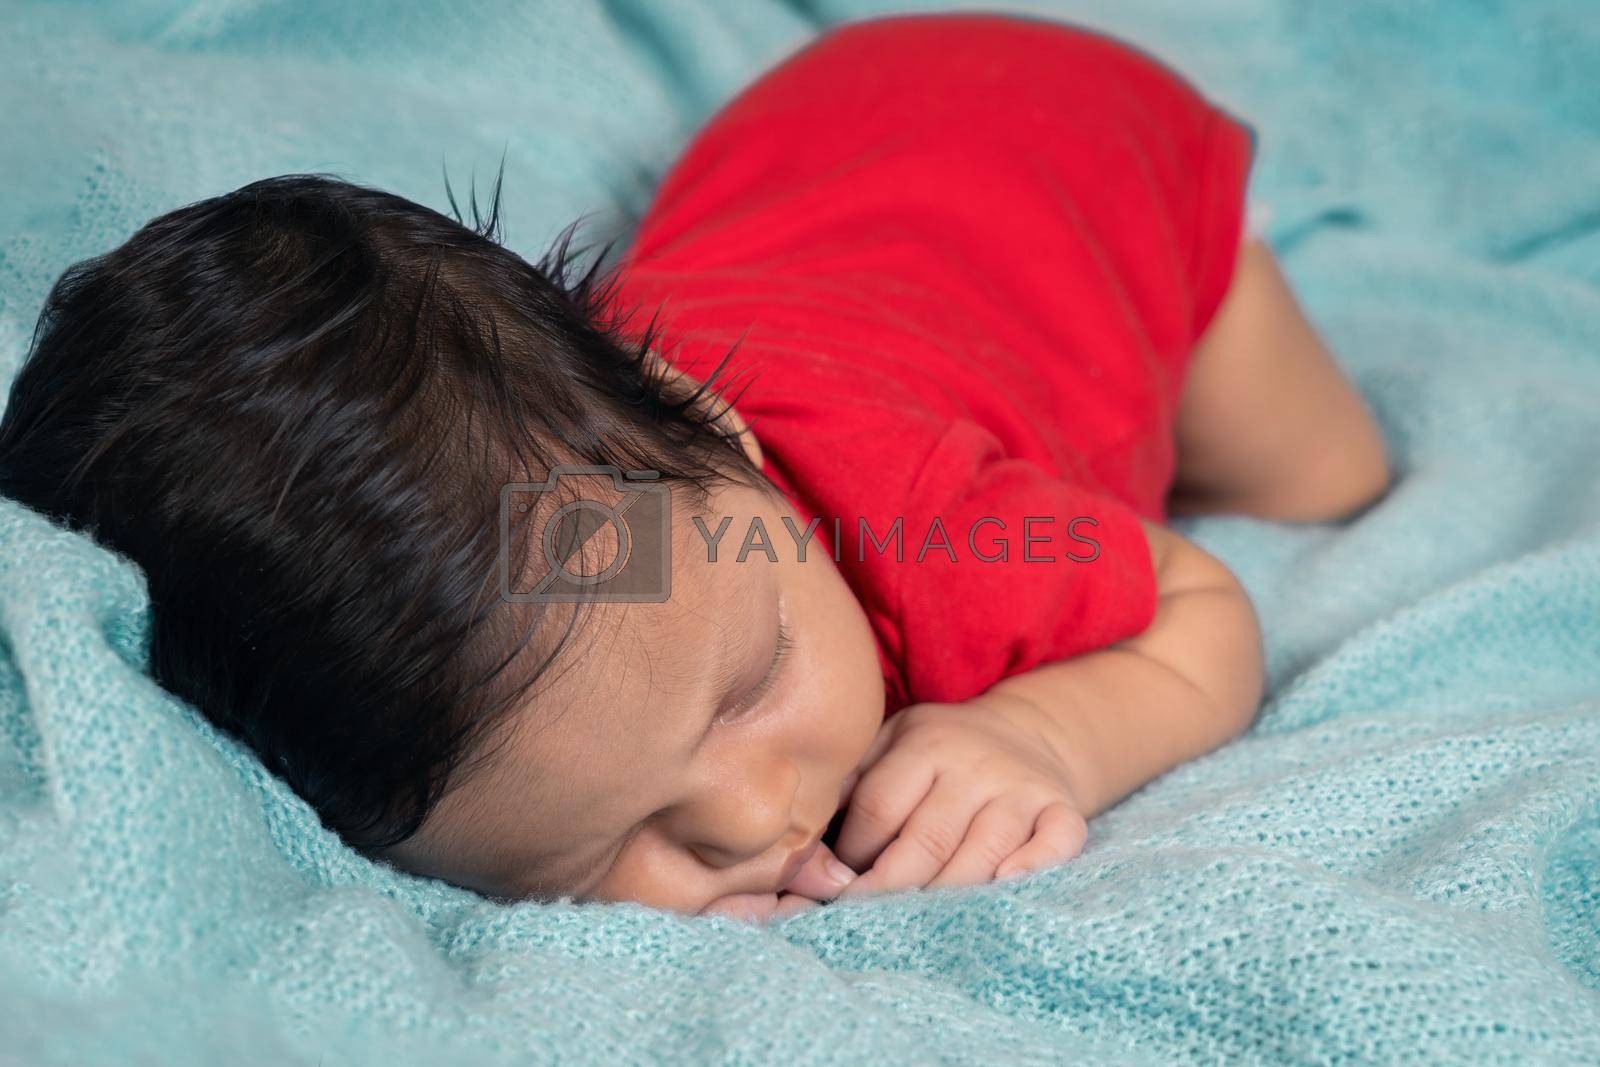 Royalty free image of Sleeping baby by jrivalta